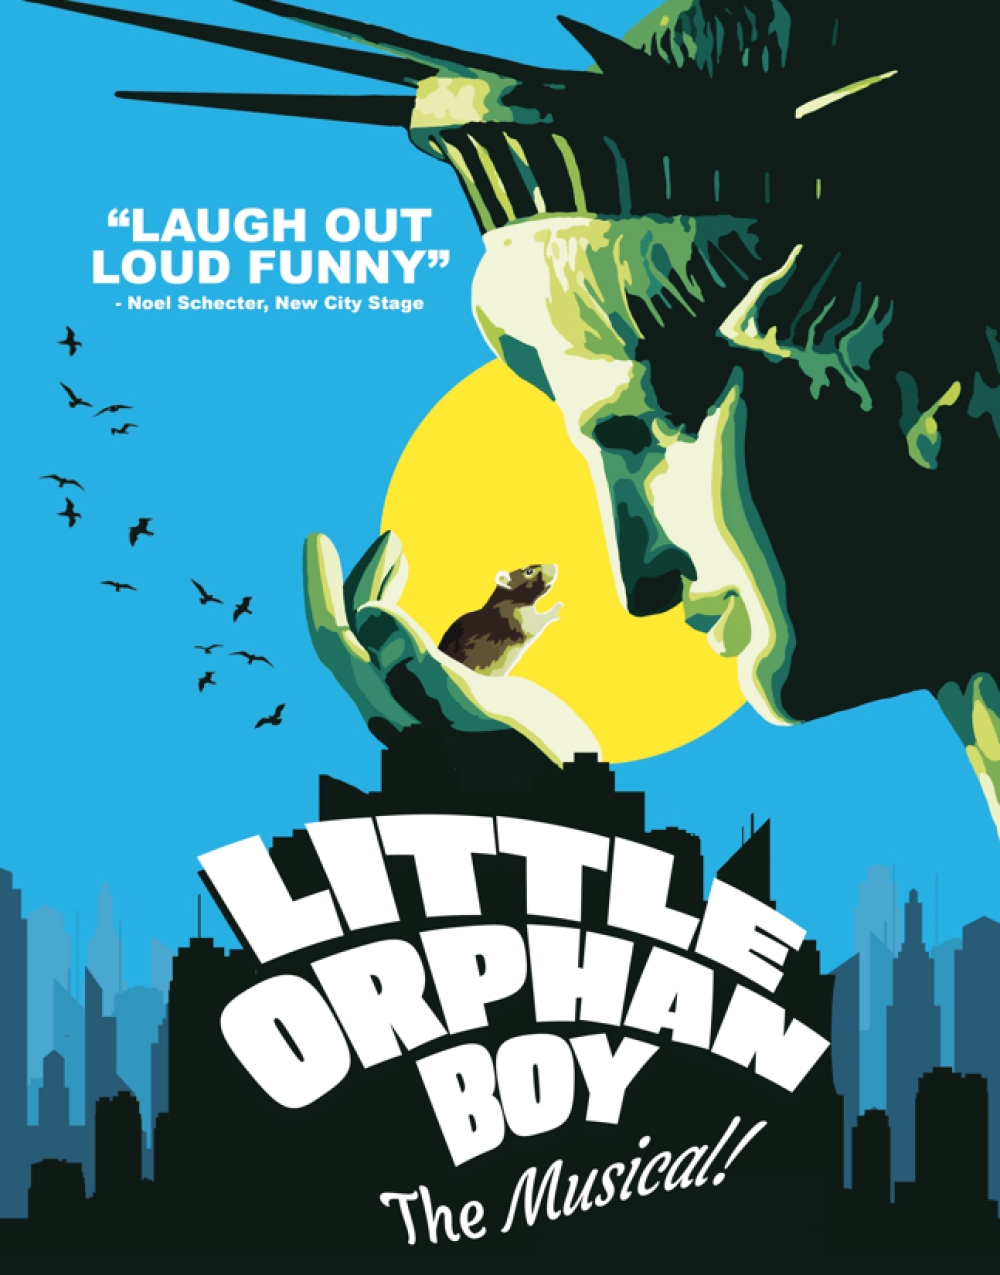 Little Orphan Boy the Musical at Annoyance Theatre & Bar